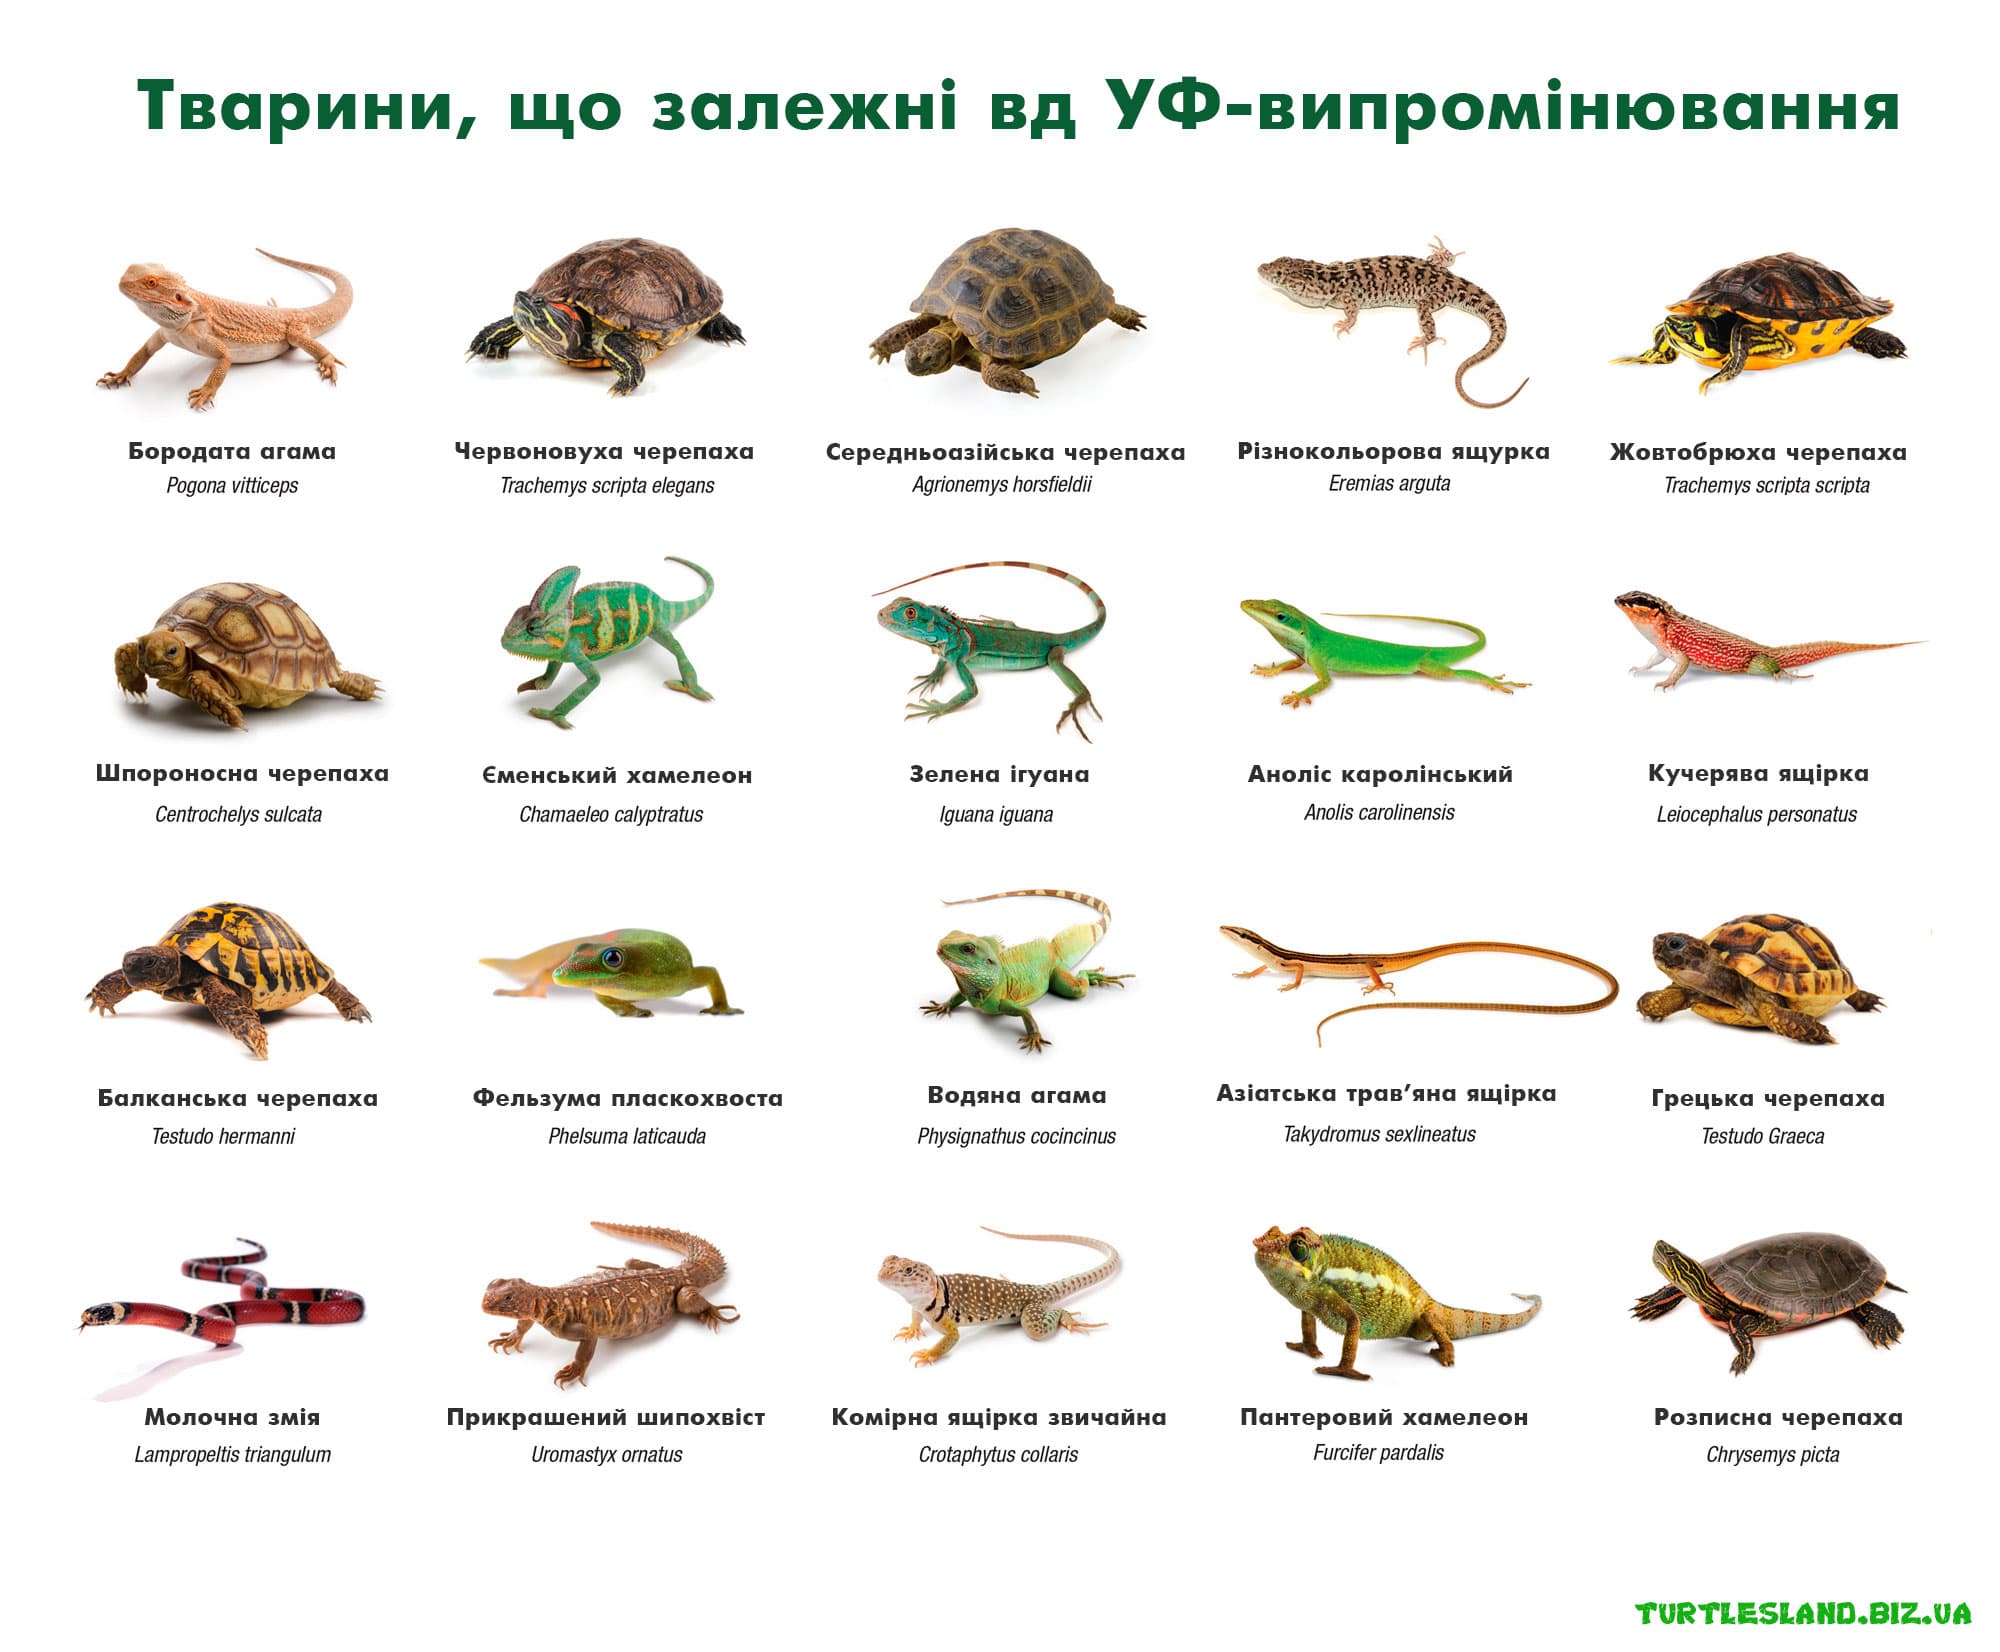 UVB-reptiles-ukr-2-min